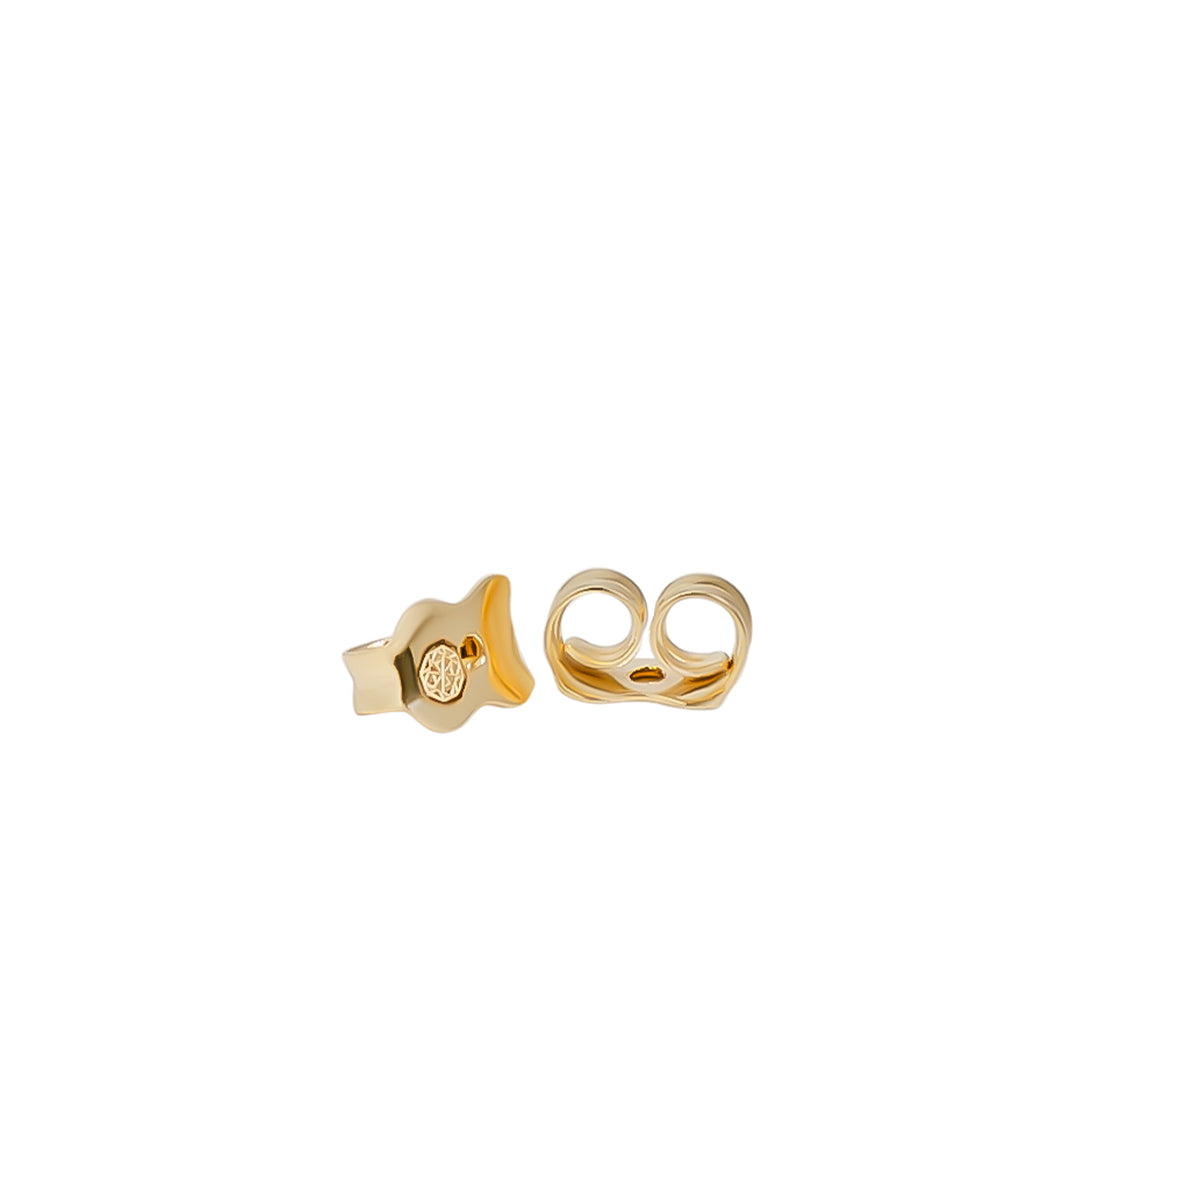 18ct Yellow Gold Turquoise Gemstone Stud Earrings